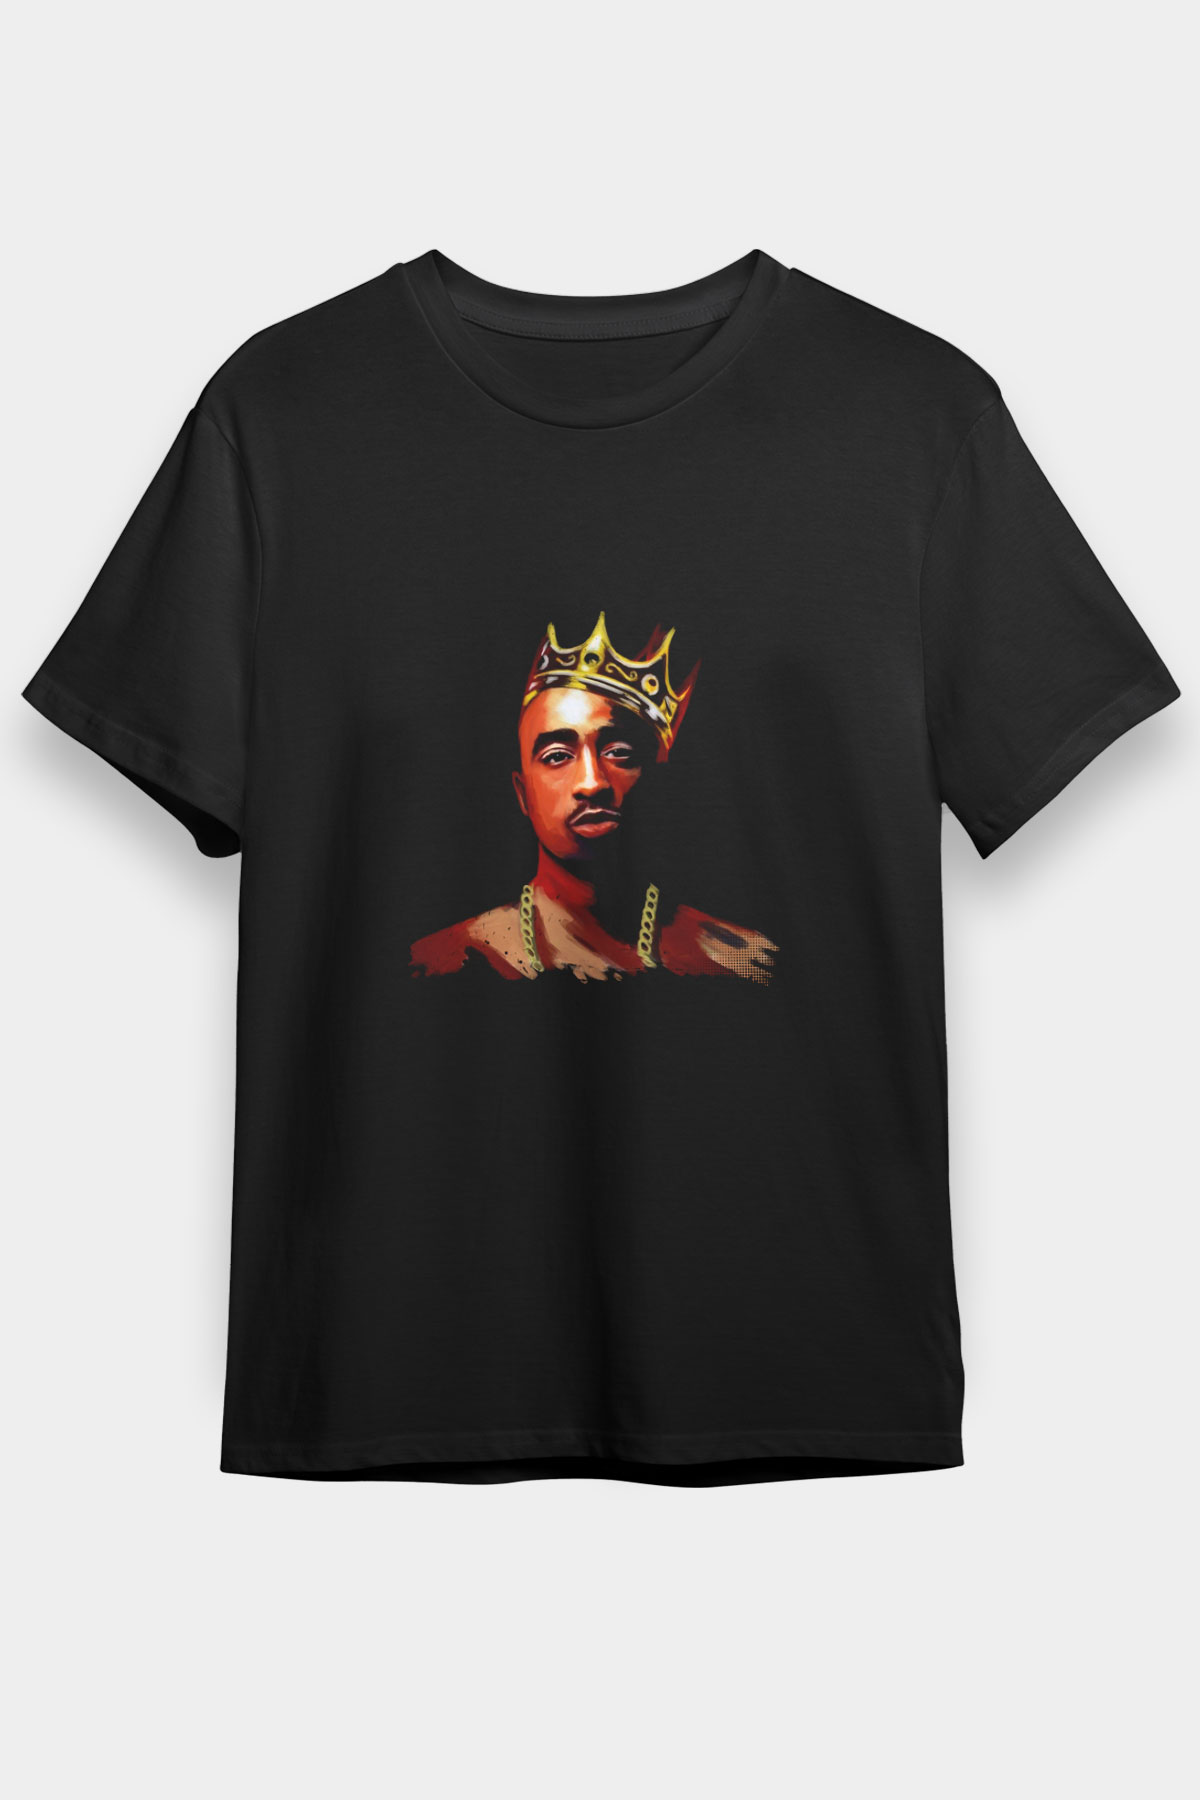 Tupac Shakur T shirt,Hip Hop,Rap Tshirt 17/